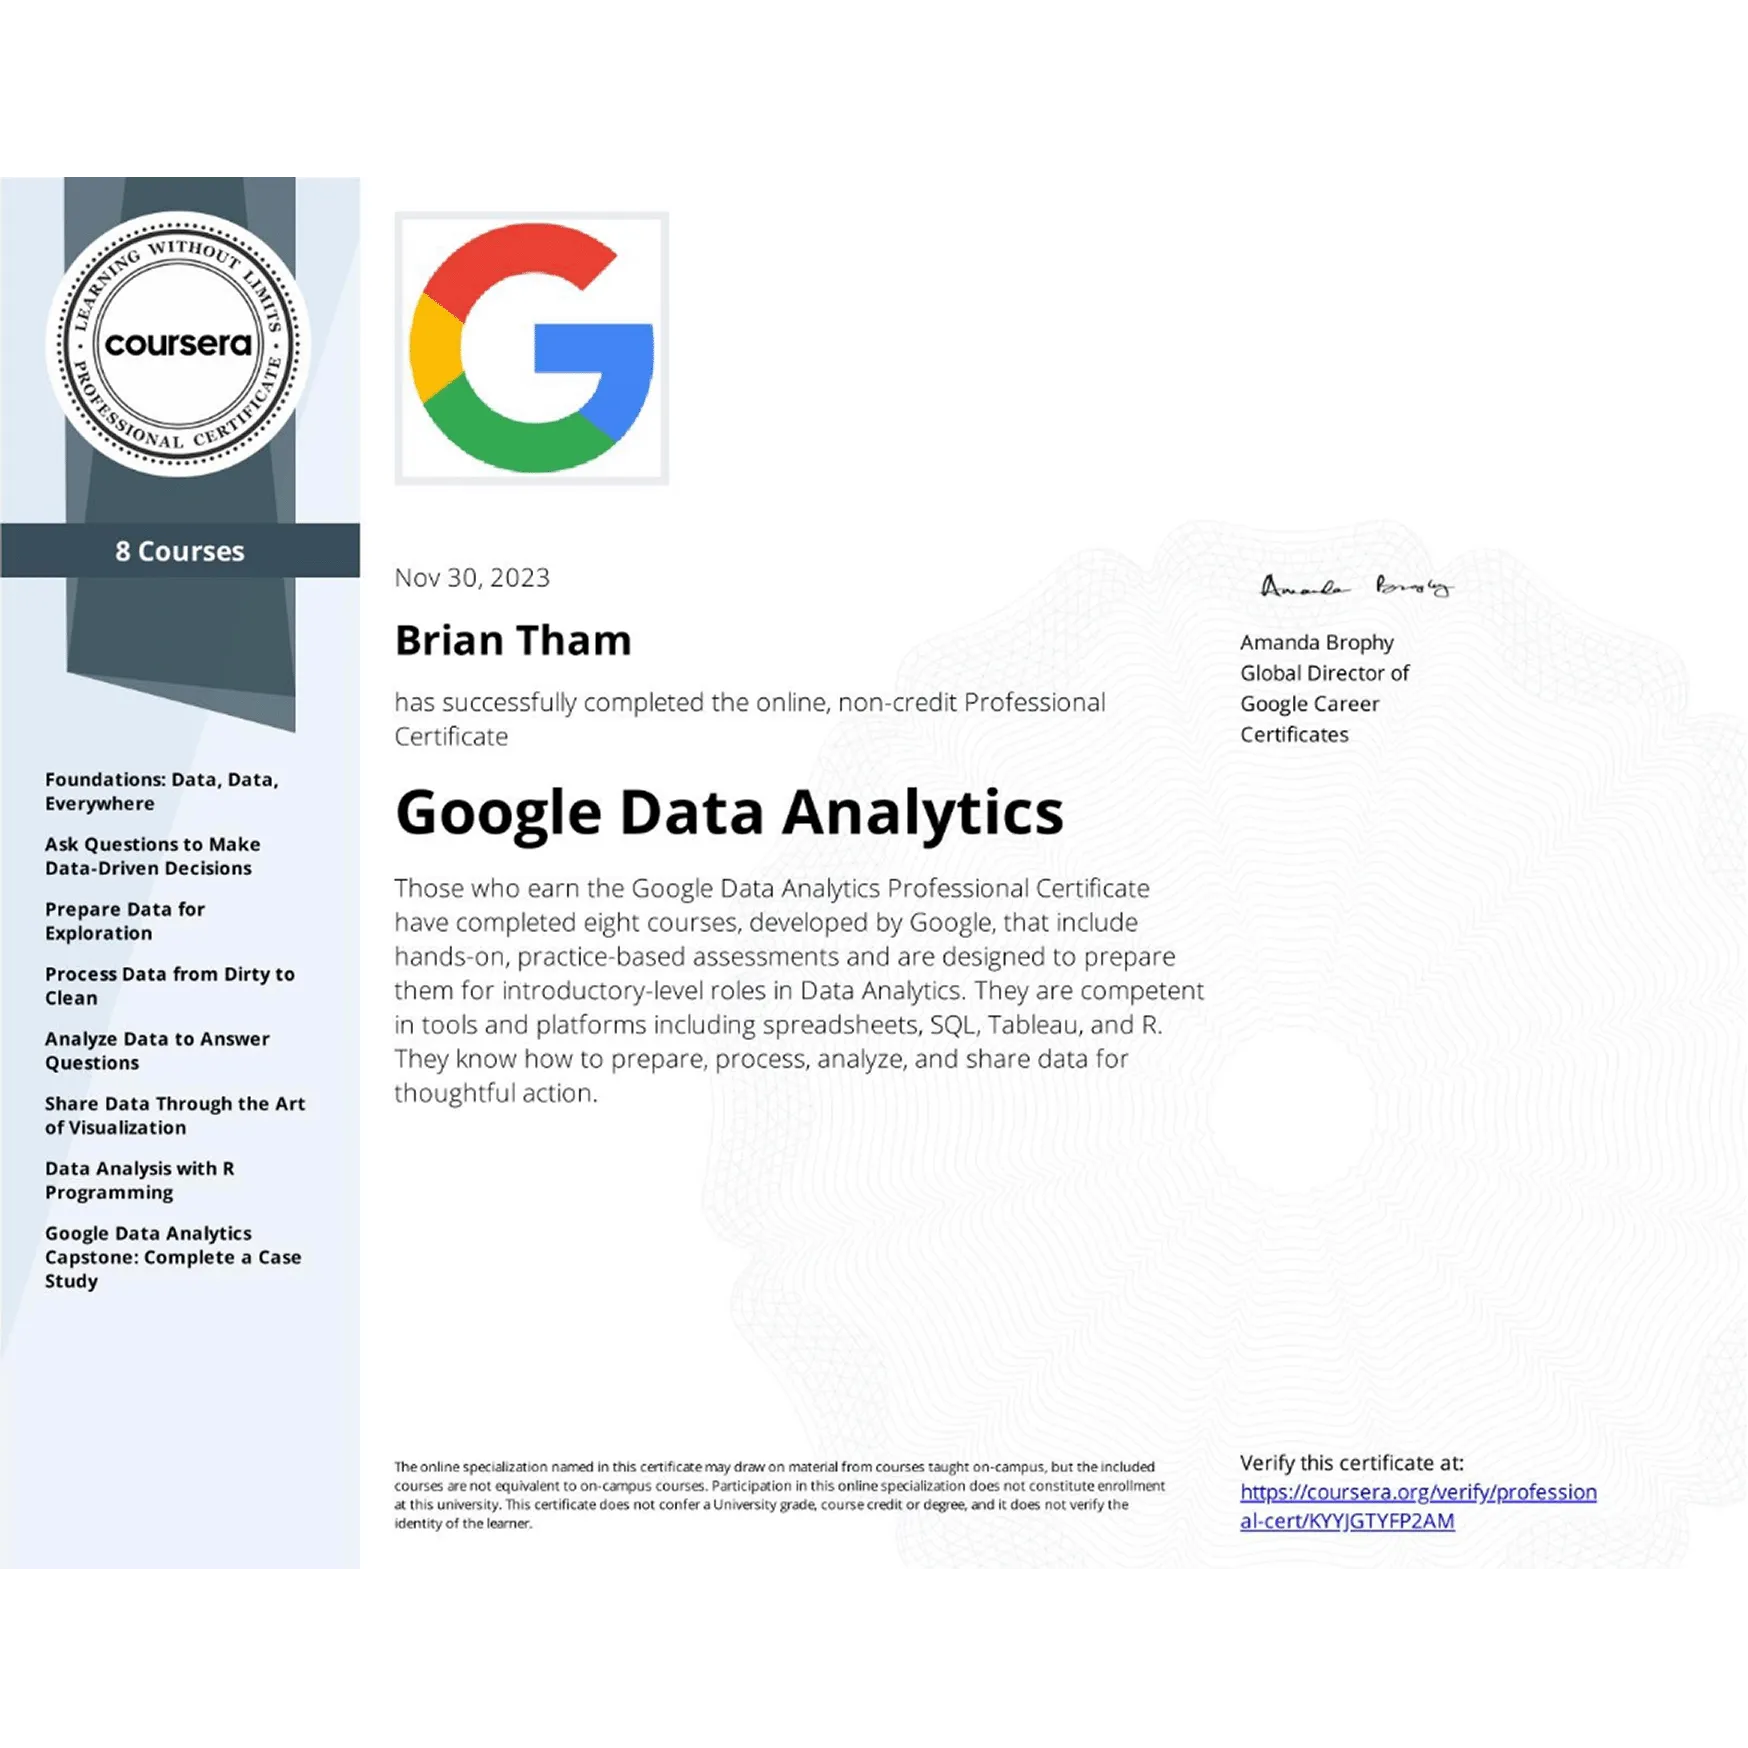 Google Data Analytics certificate awarded to Brian Tham